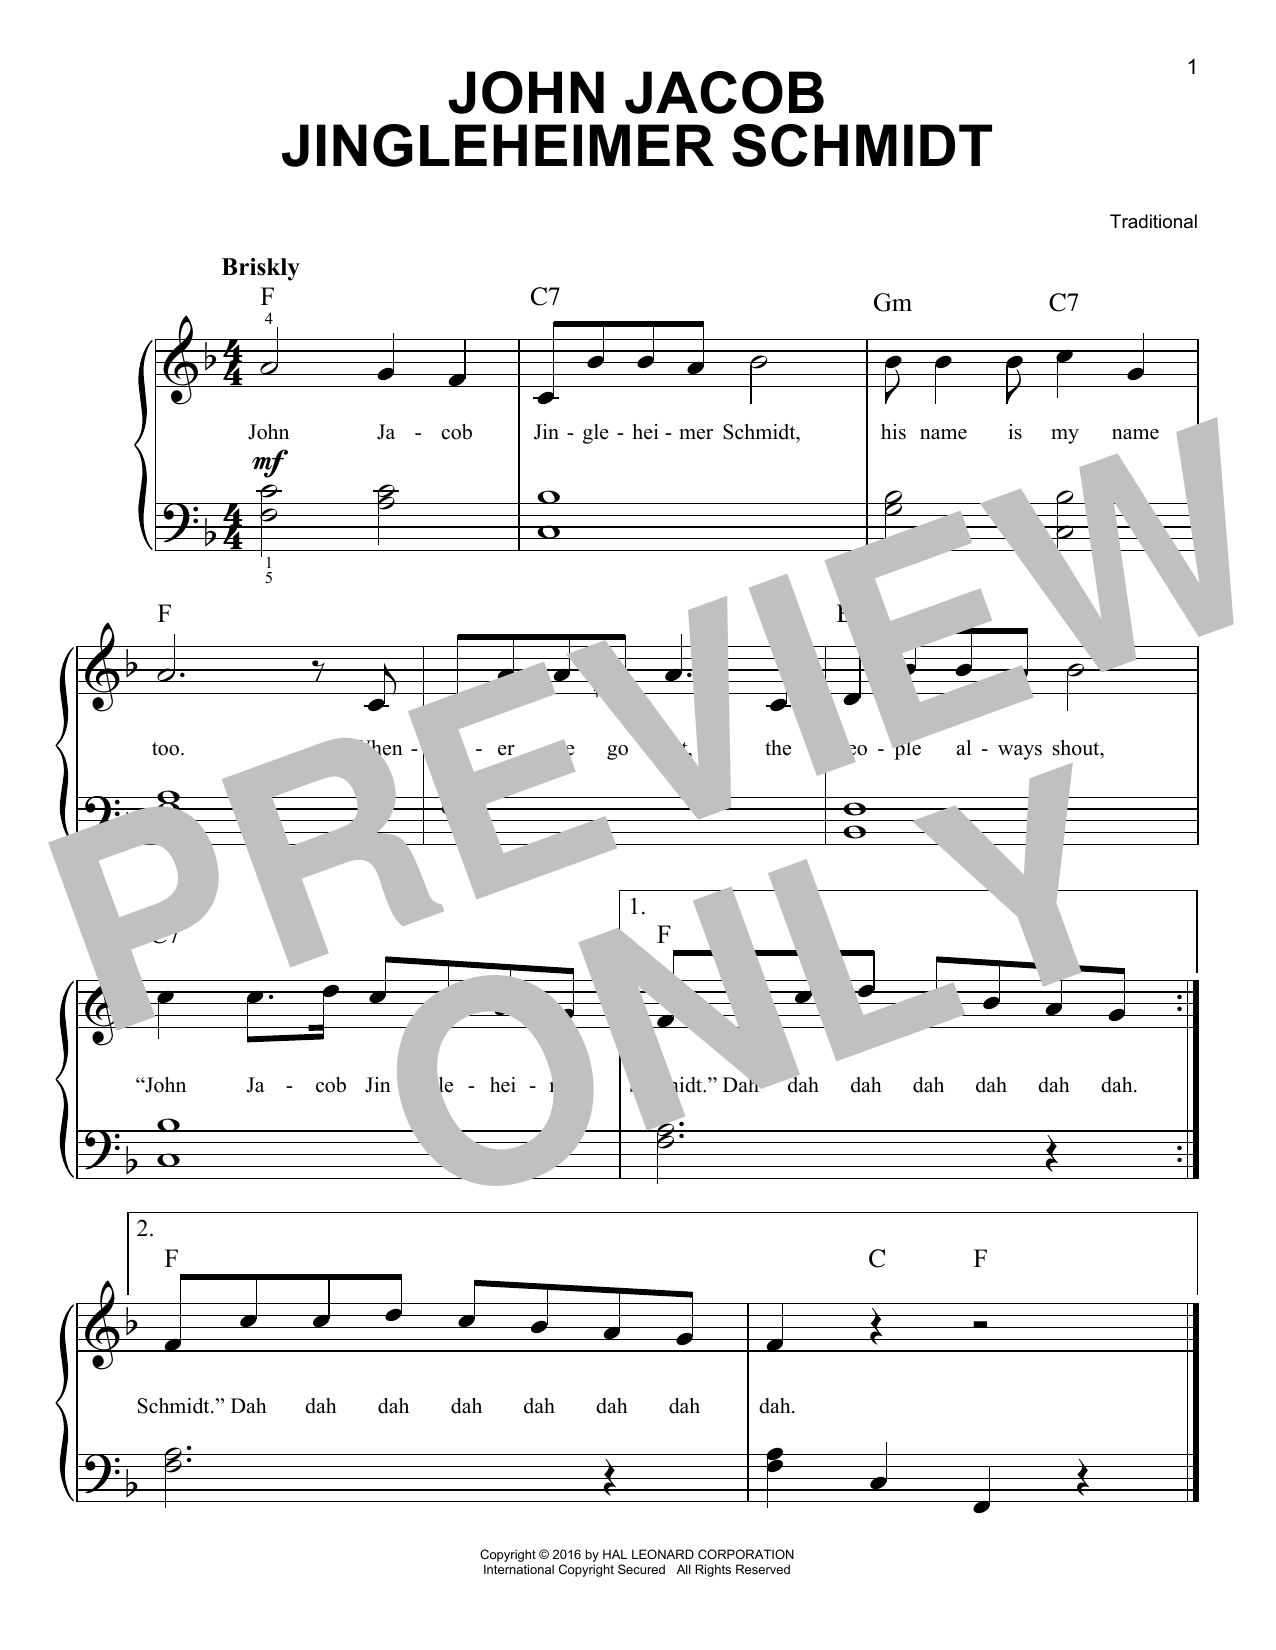 Traditional John Jacob Jingleheimer Schmidt Sheet Music Notes & Chords for SPREP - Download or Print PDF